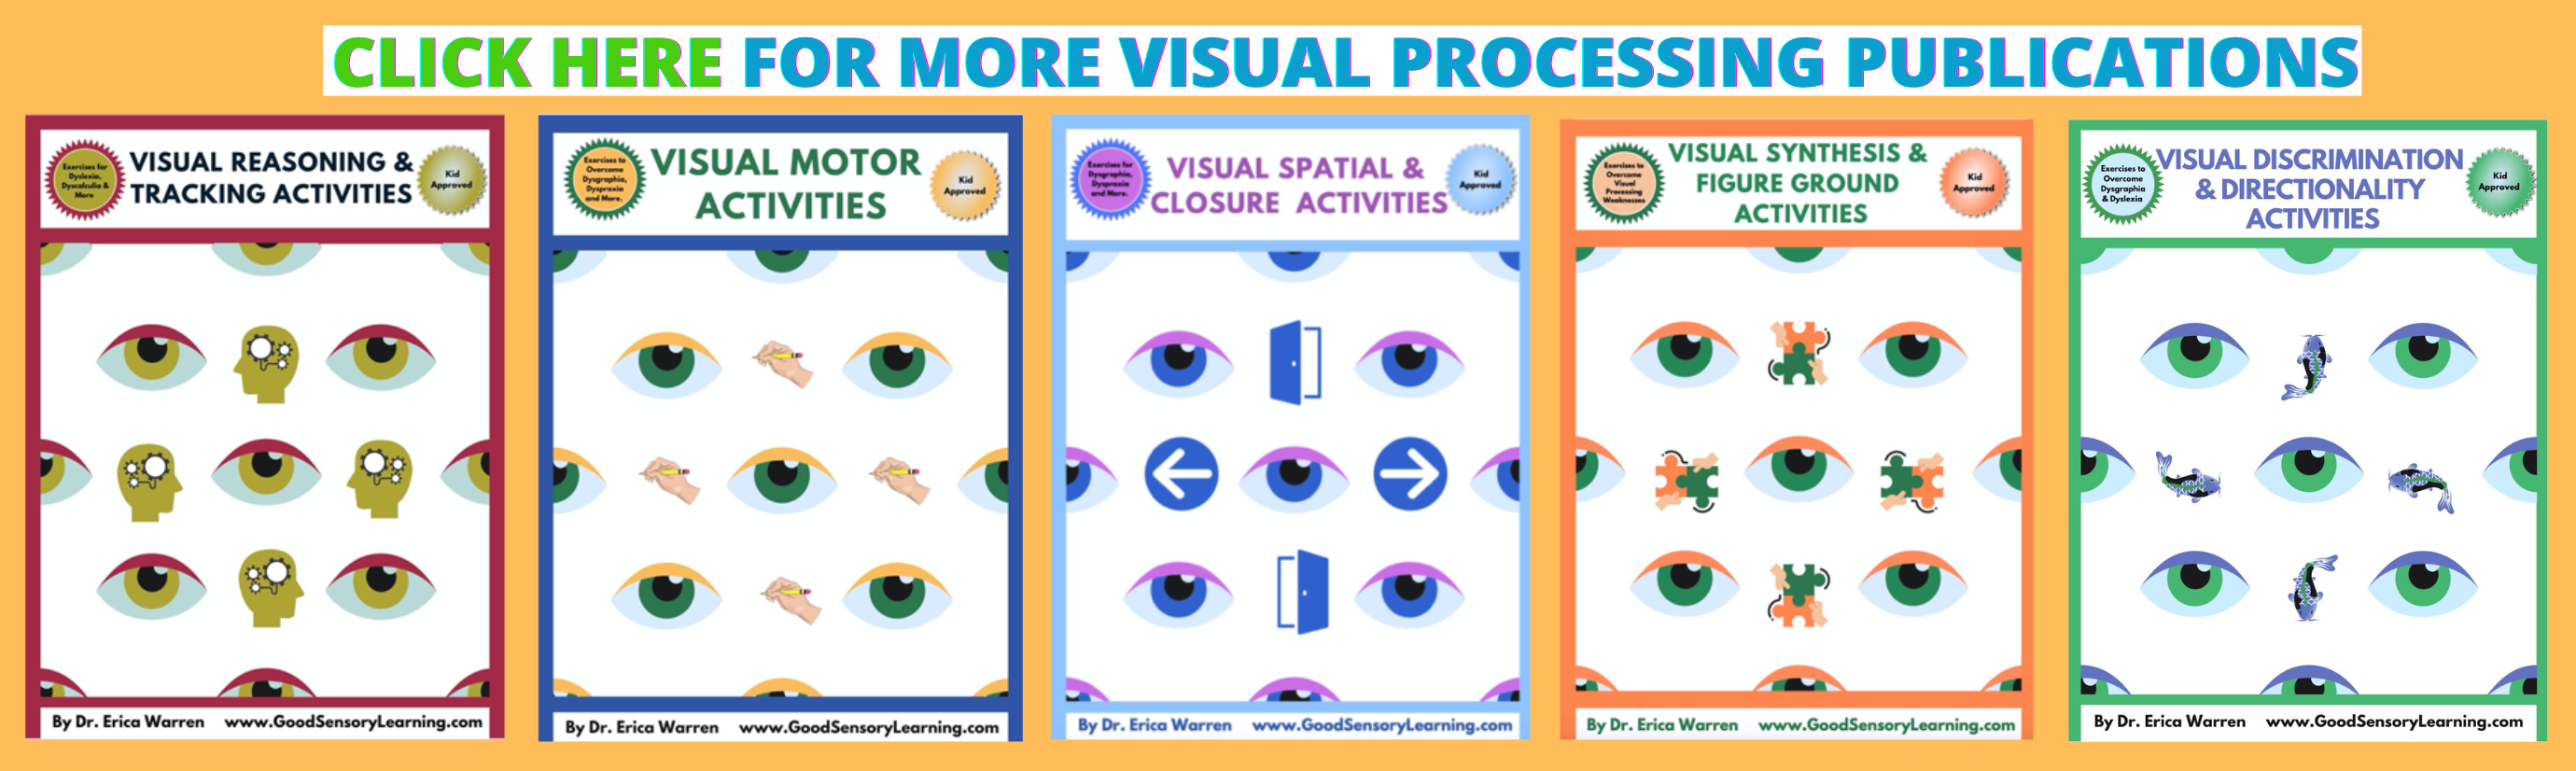 visual processing pubs